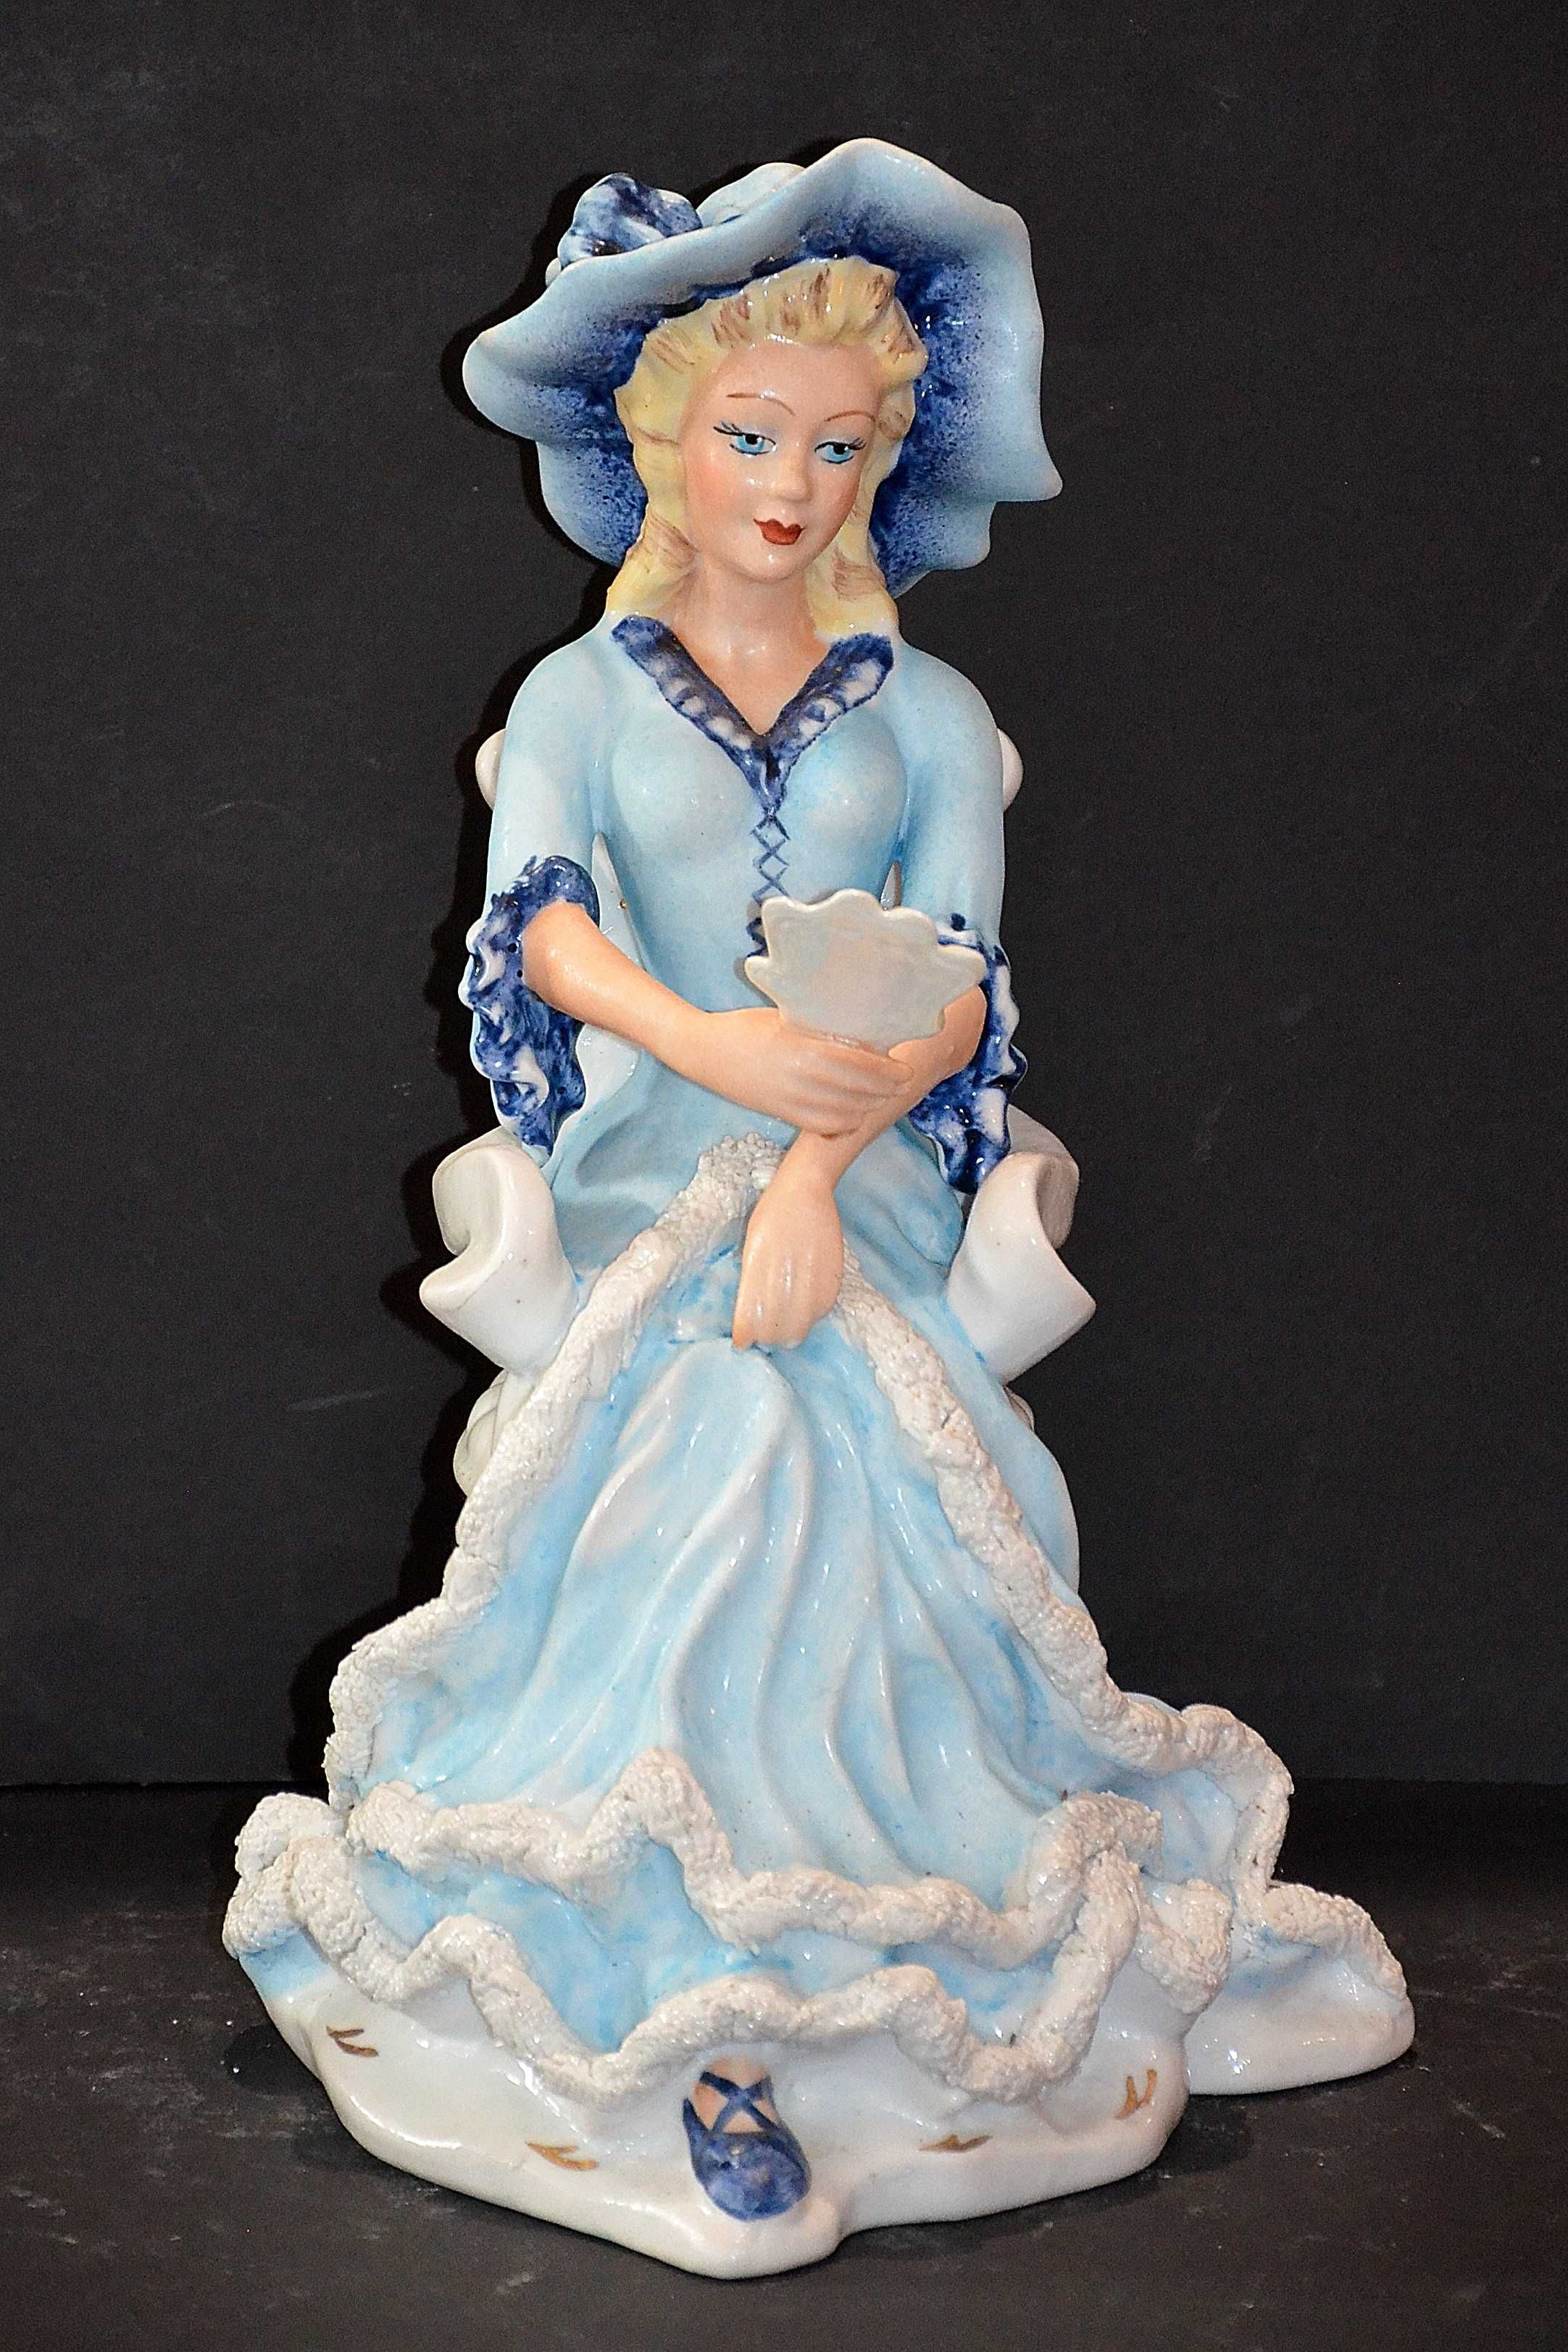 Roceram porcelana figurka Amalia 2 kolory do kolekcji 28 cm